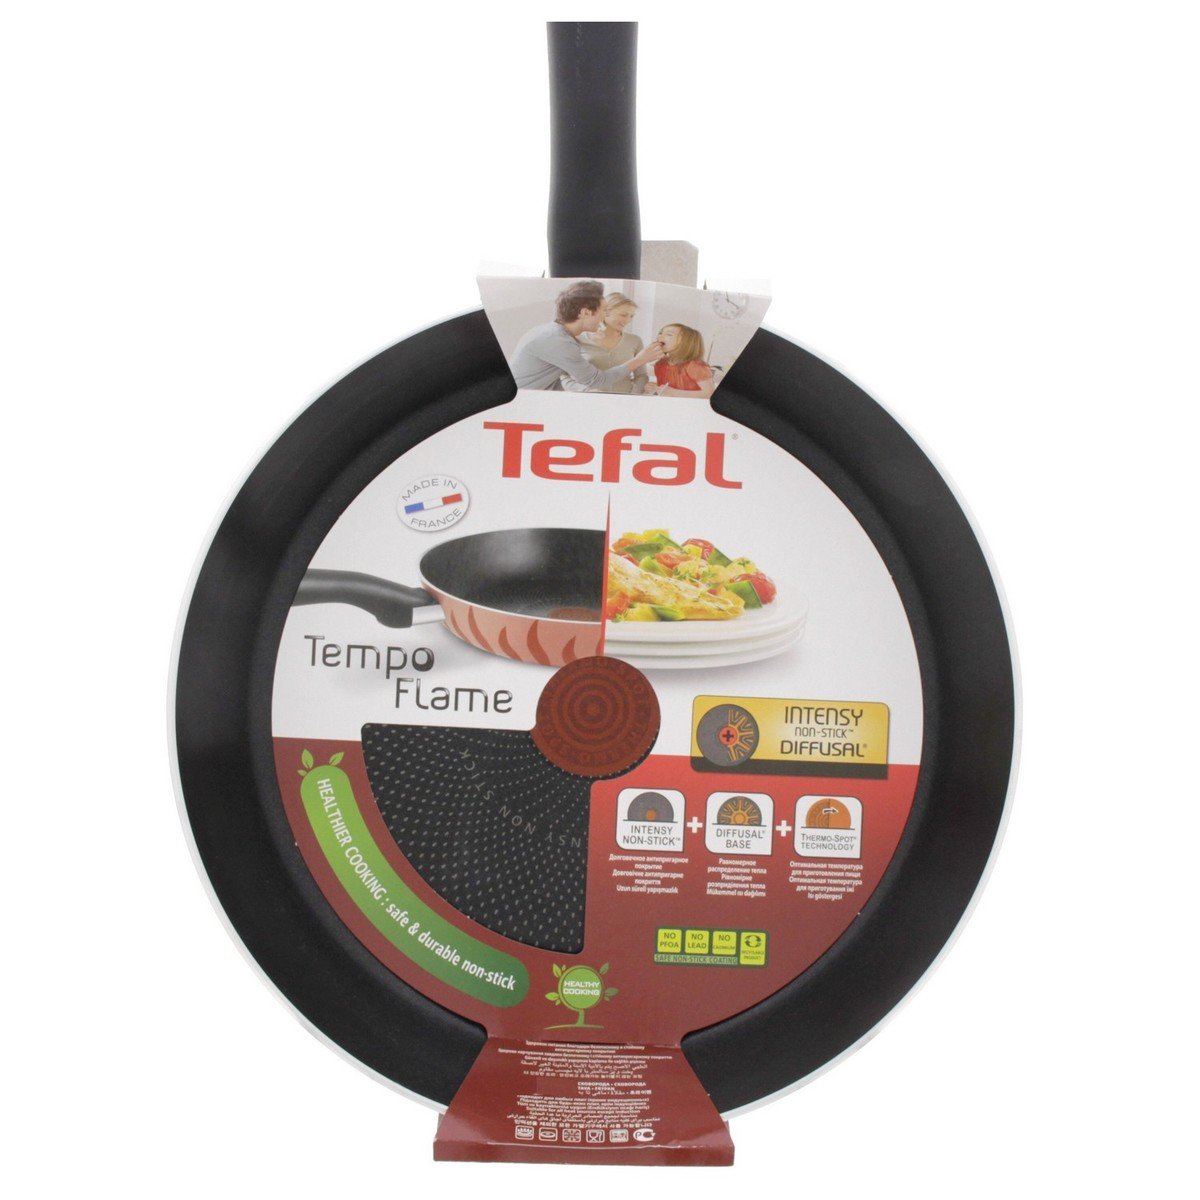 Tefal Tempo Flame Fry Pan C0450862 32cm